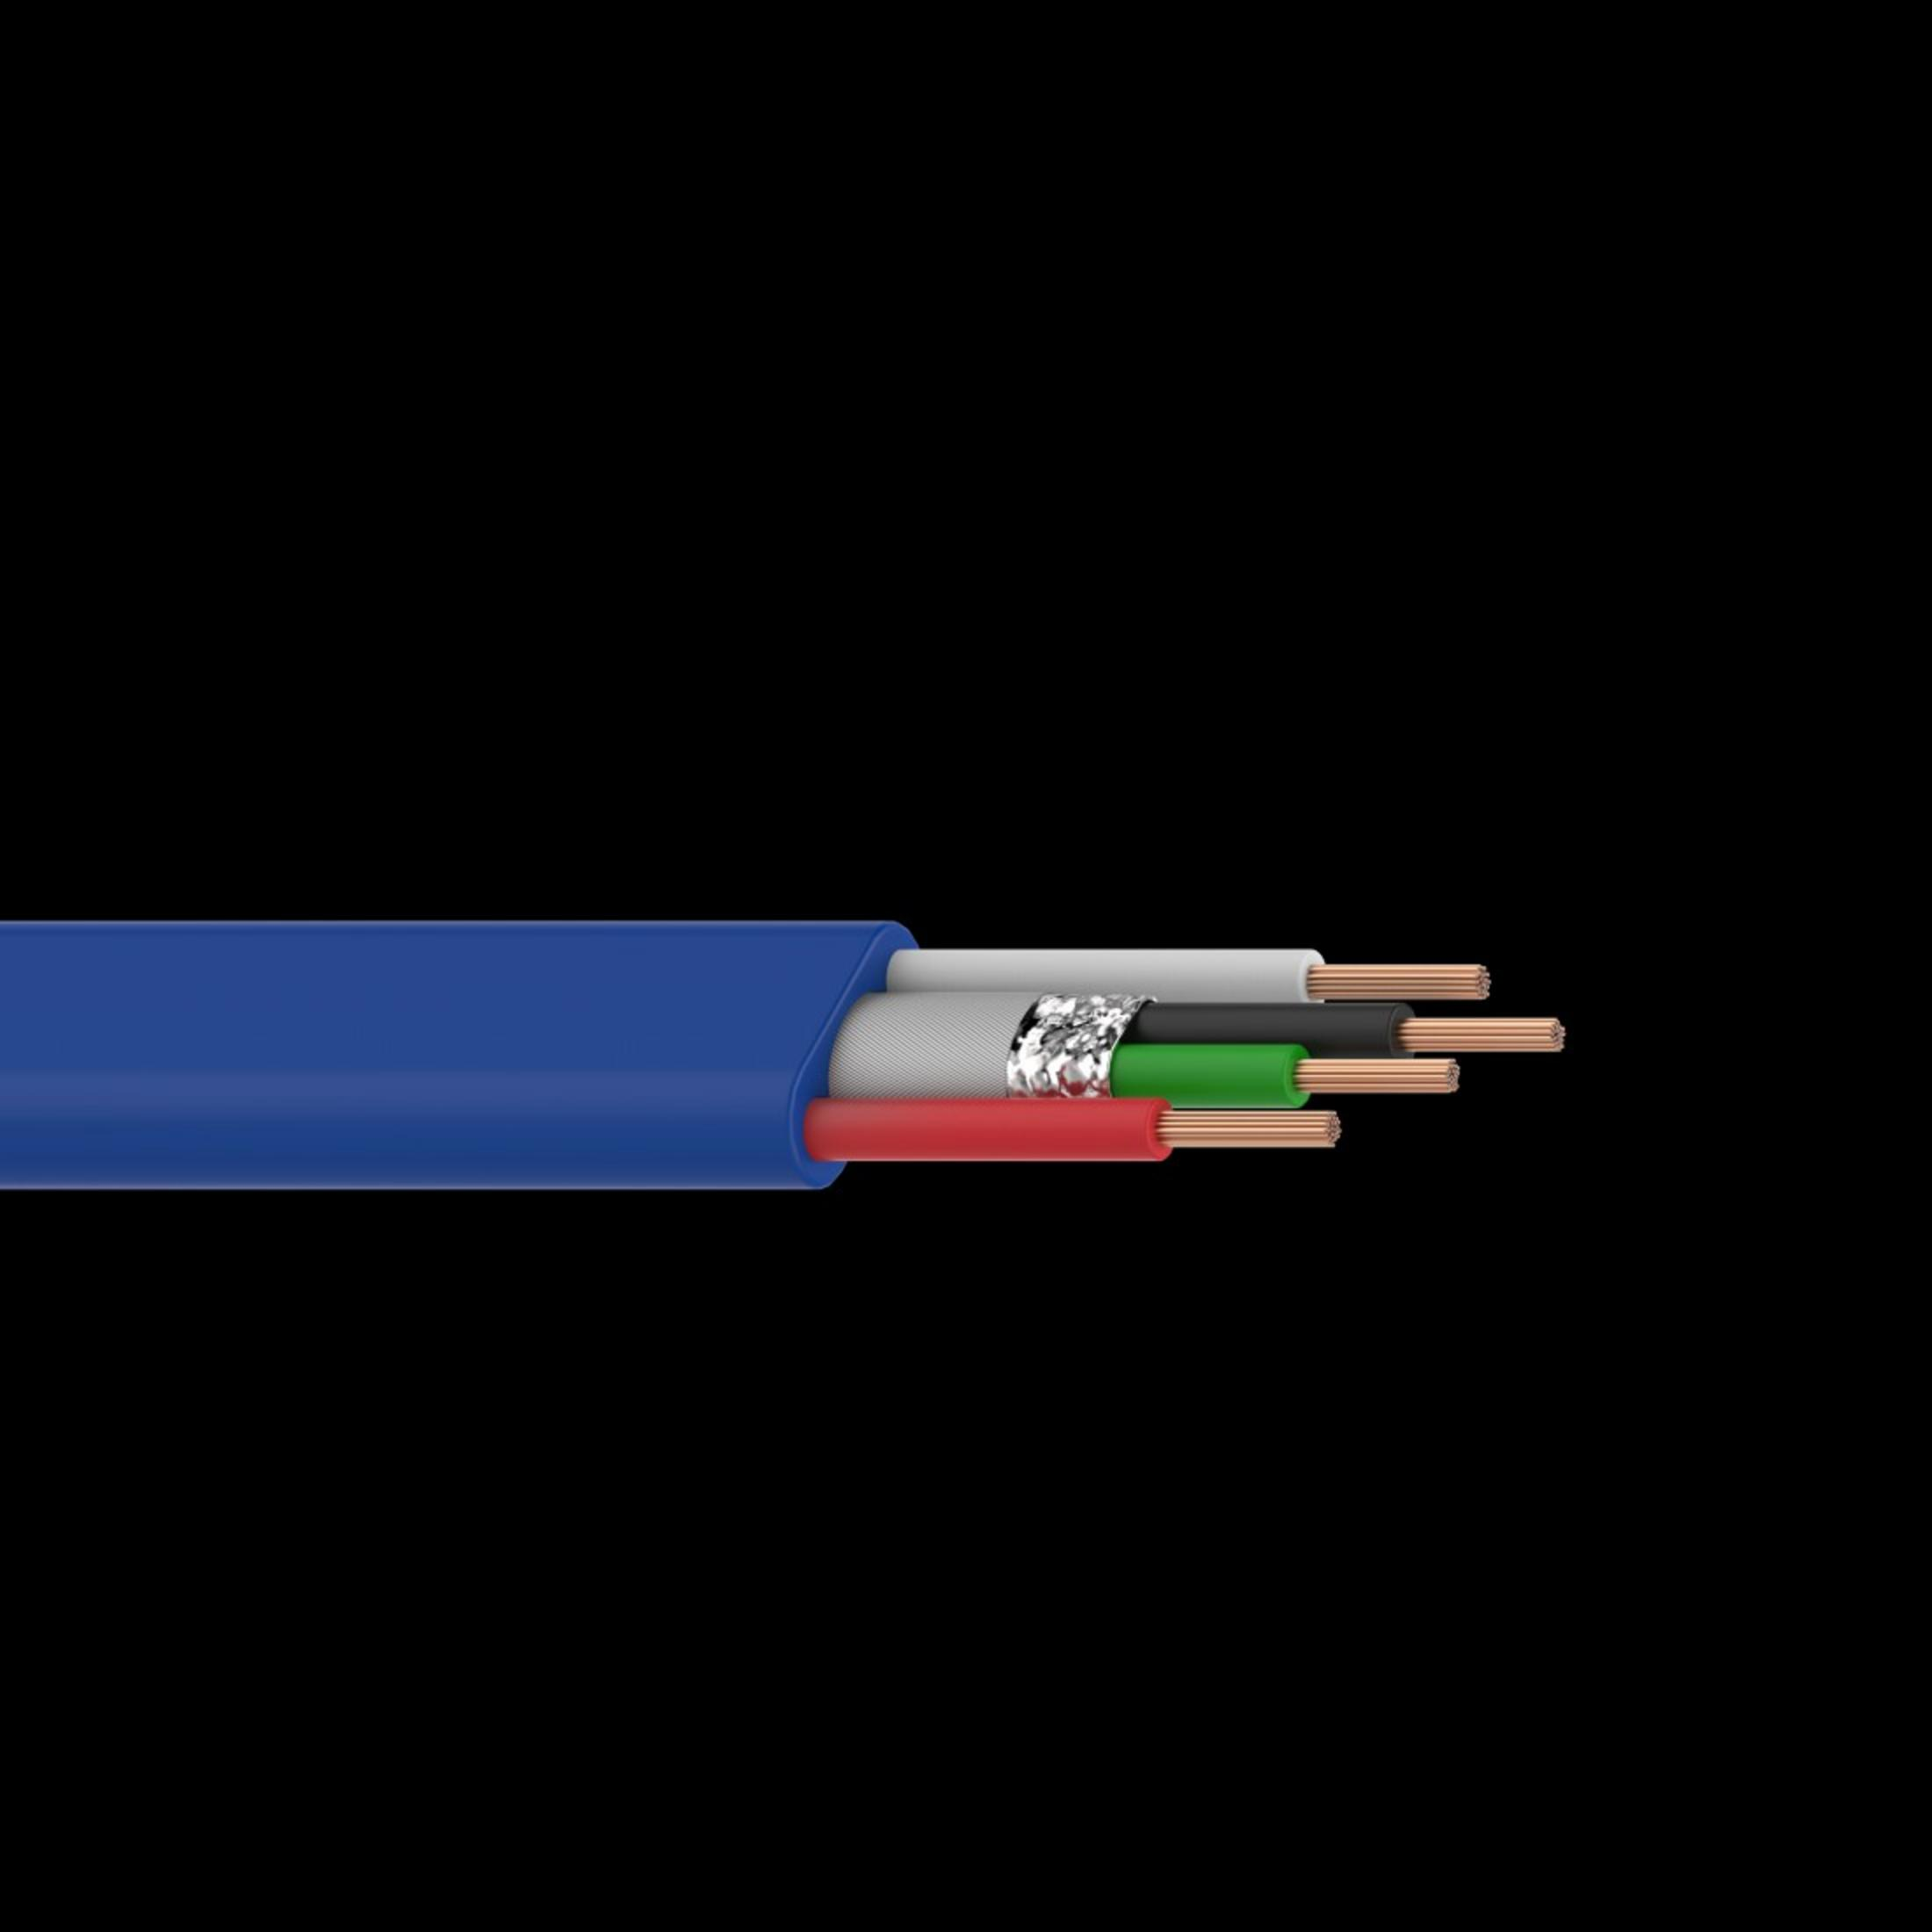 LAD-DAT-KAB,FLAT,USB-A-USB-C, 1 Blau HAMA USB Kabel, 187229 m,